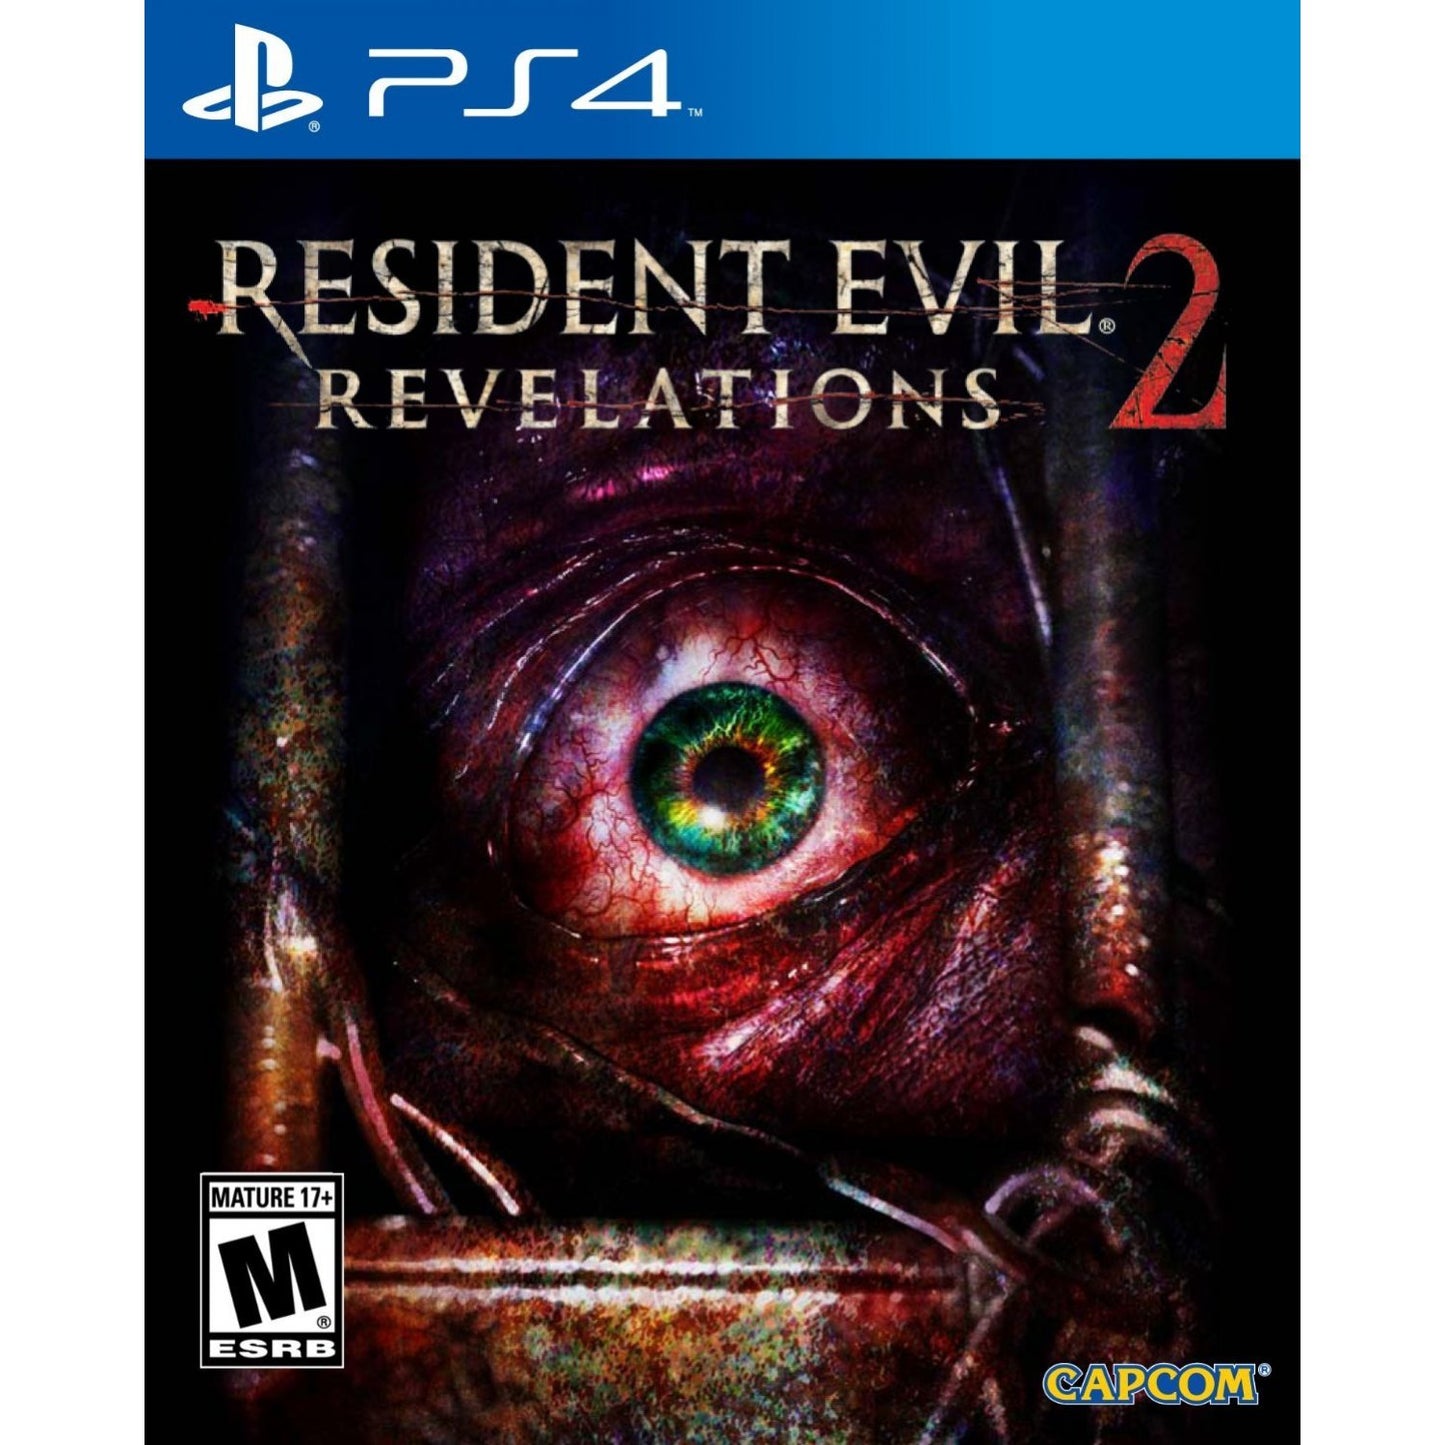 PS4 RESIDENT EVIL REVELATIONS 2 - NUEVO